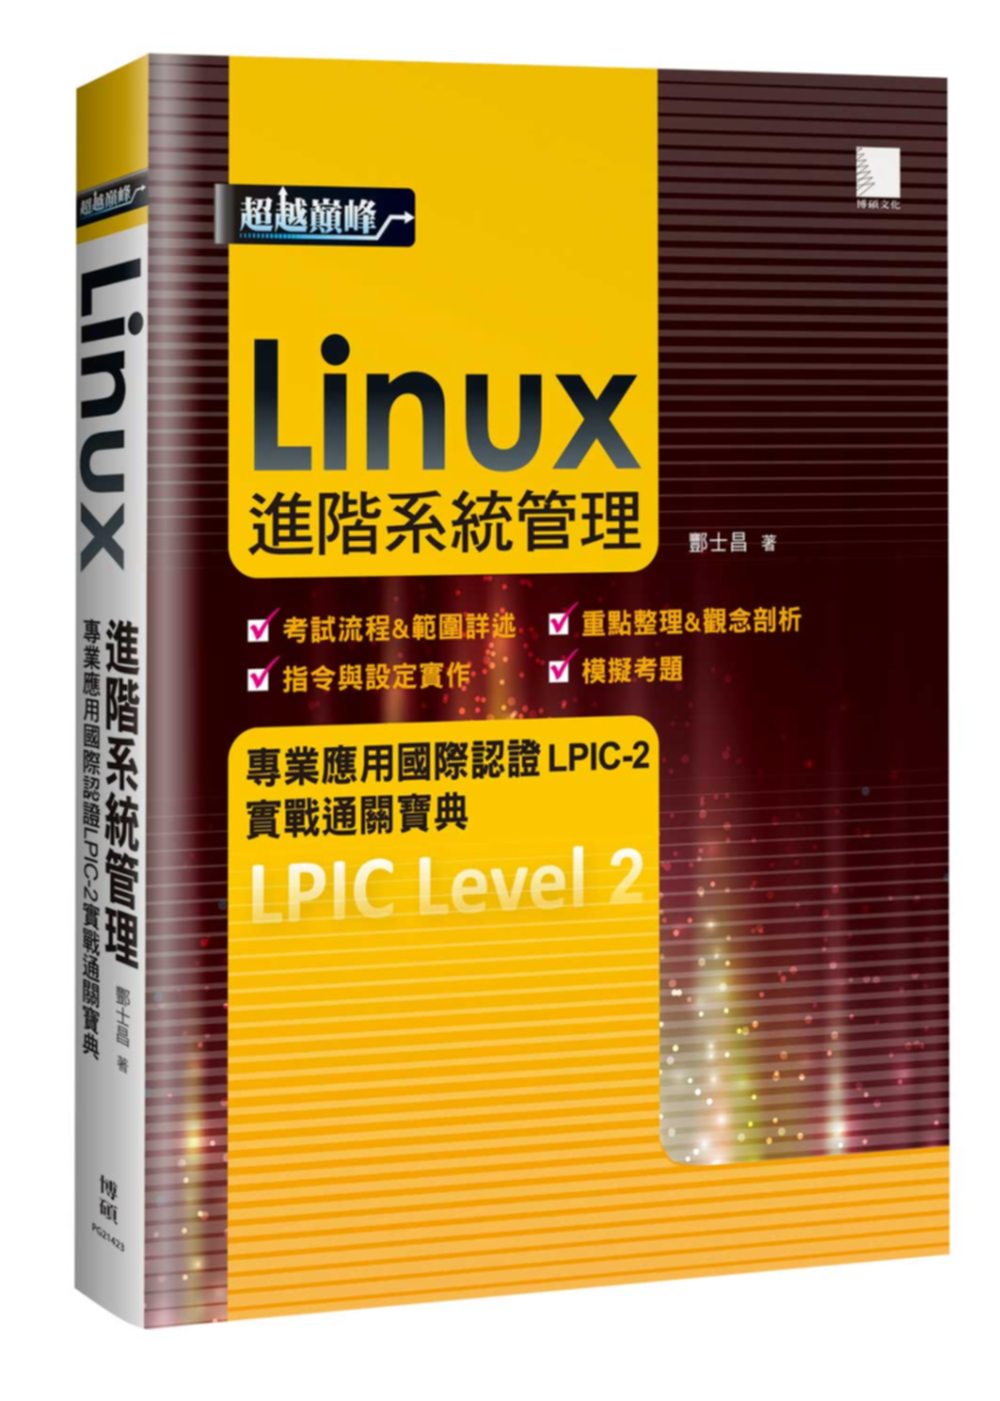 Linux進階系統管理專業應用國際認證LPIC-2實戰通關寶...